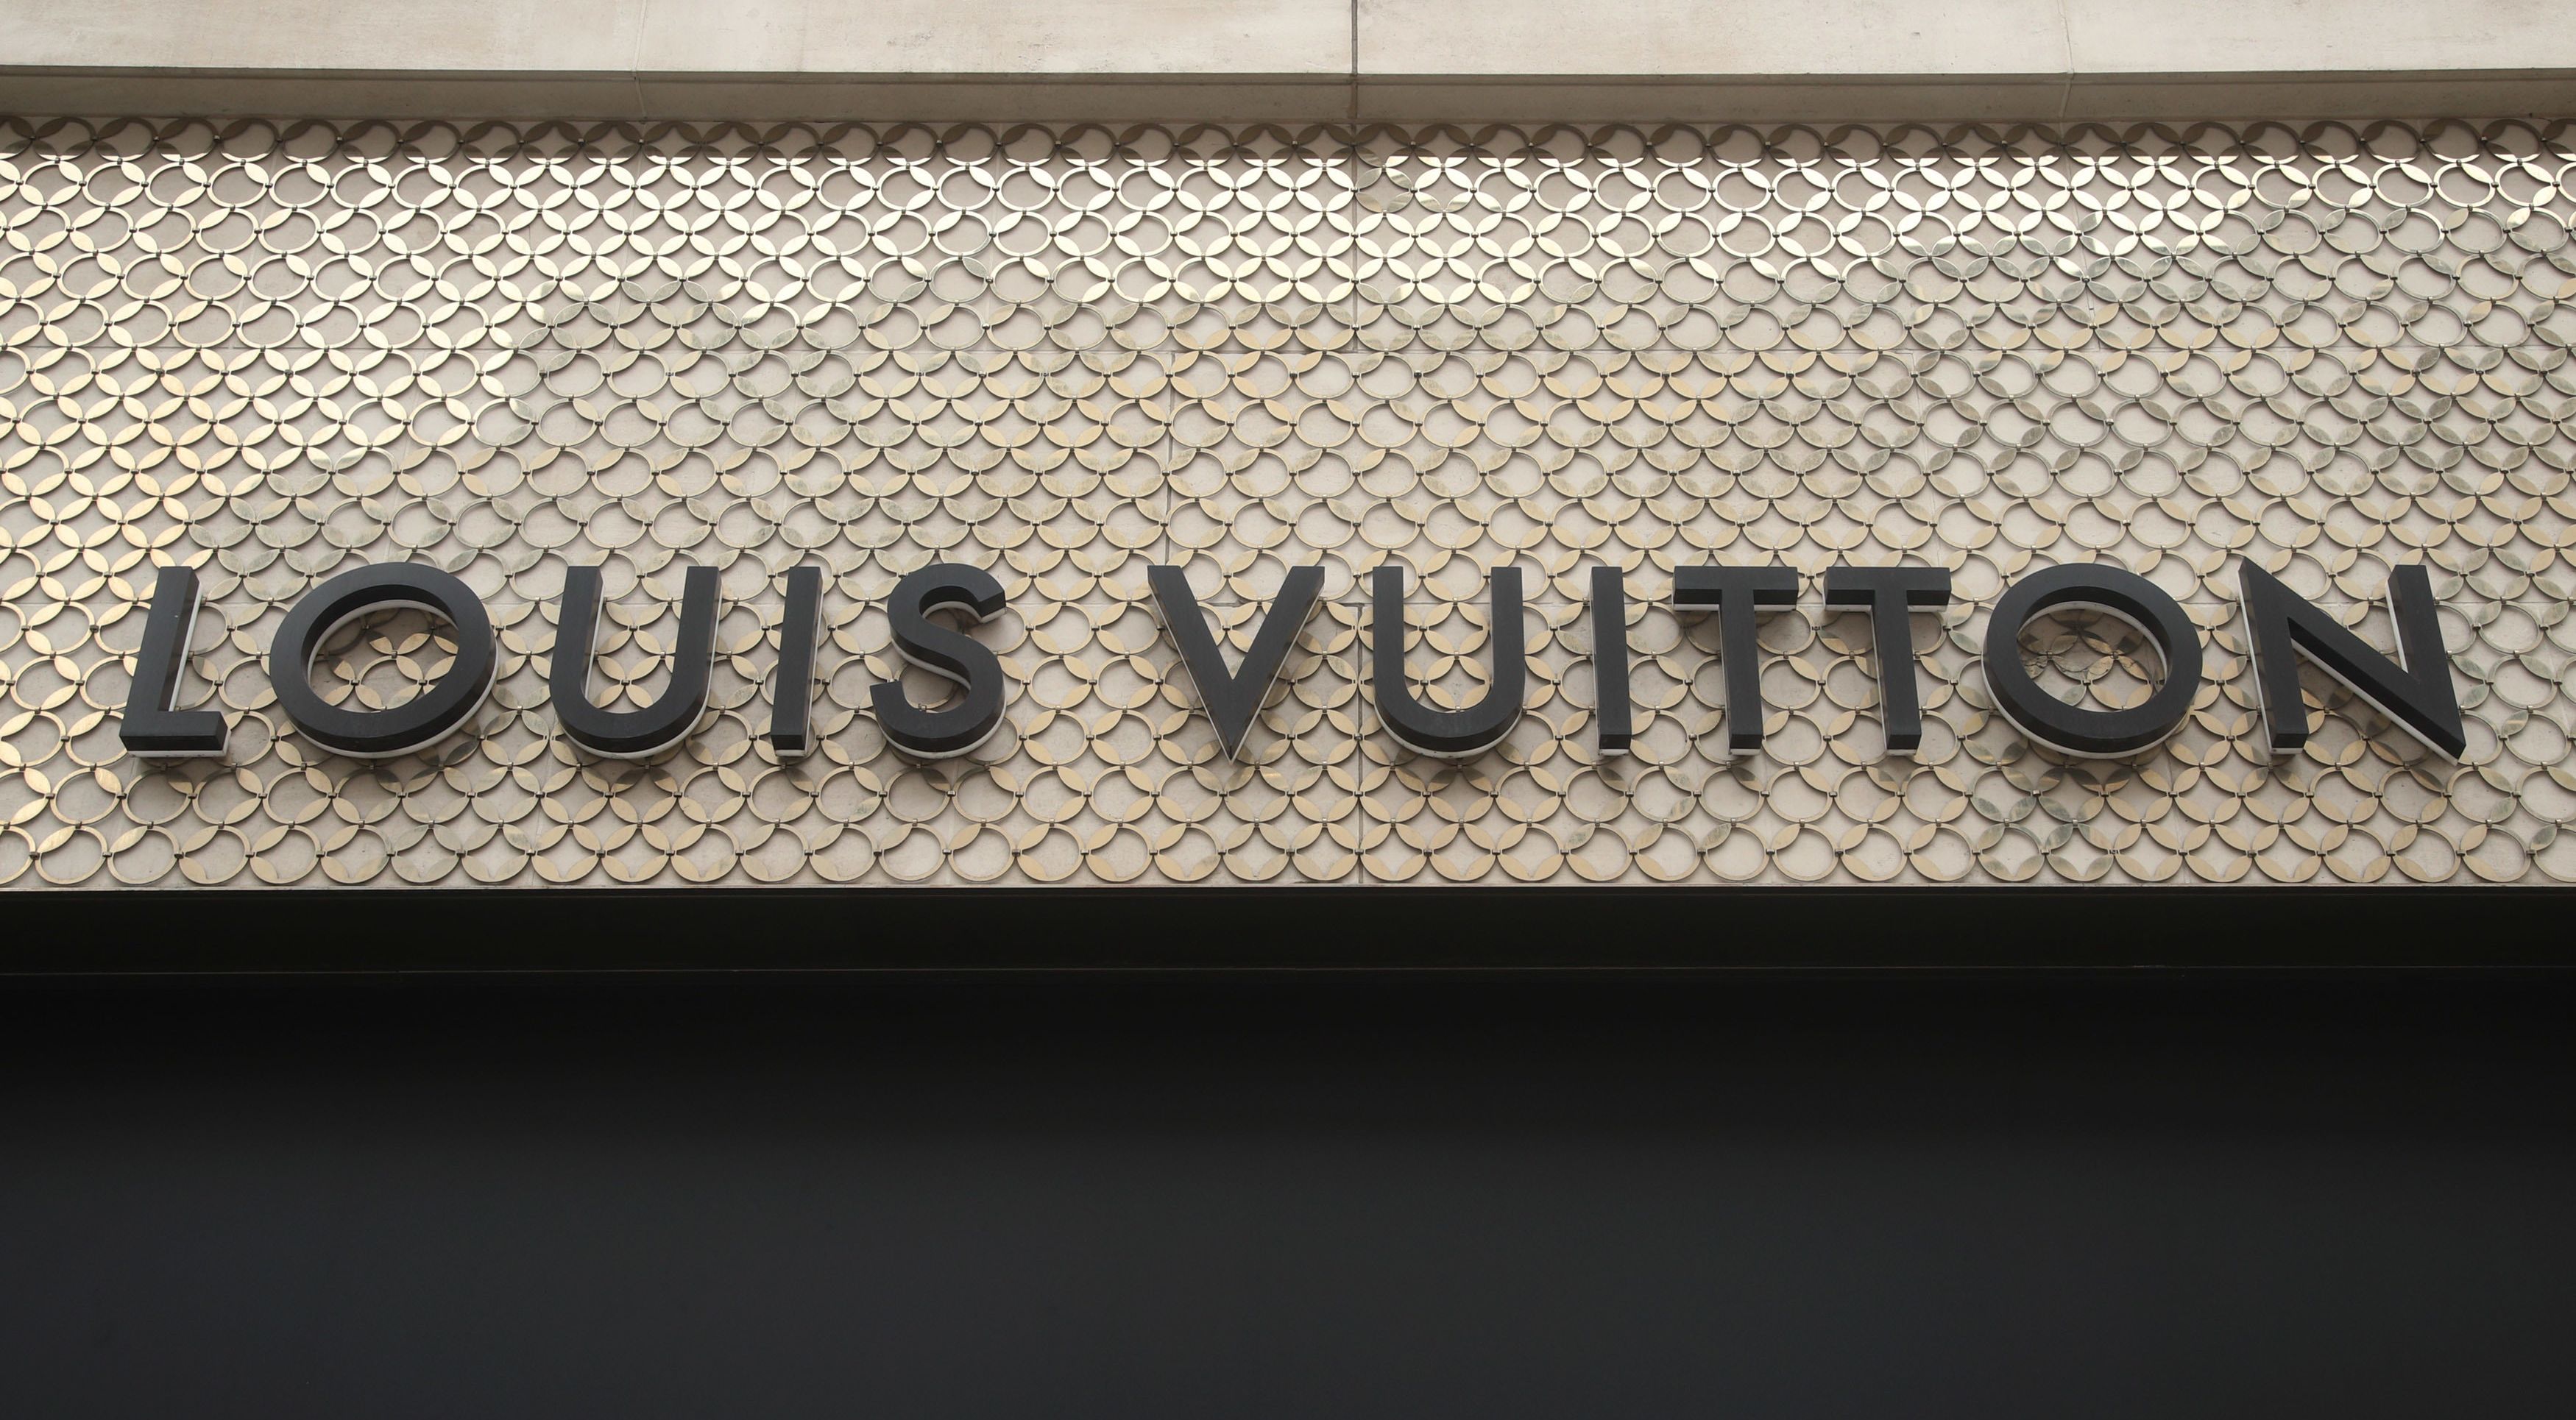 Luxury Giant LVMH to Buy Tiffany for $16.2 Billion - The New York